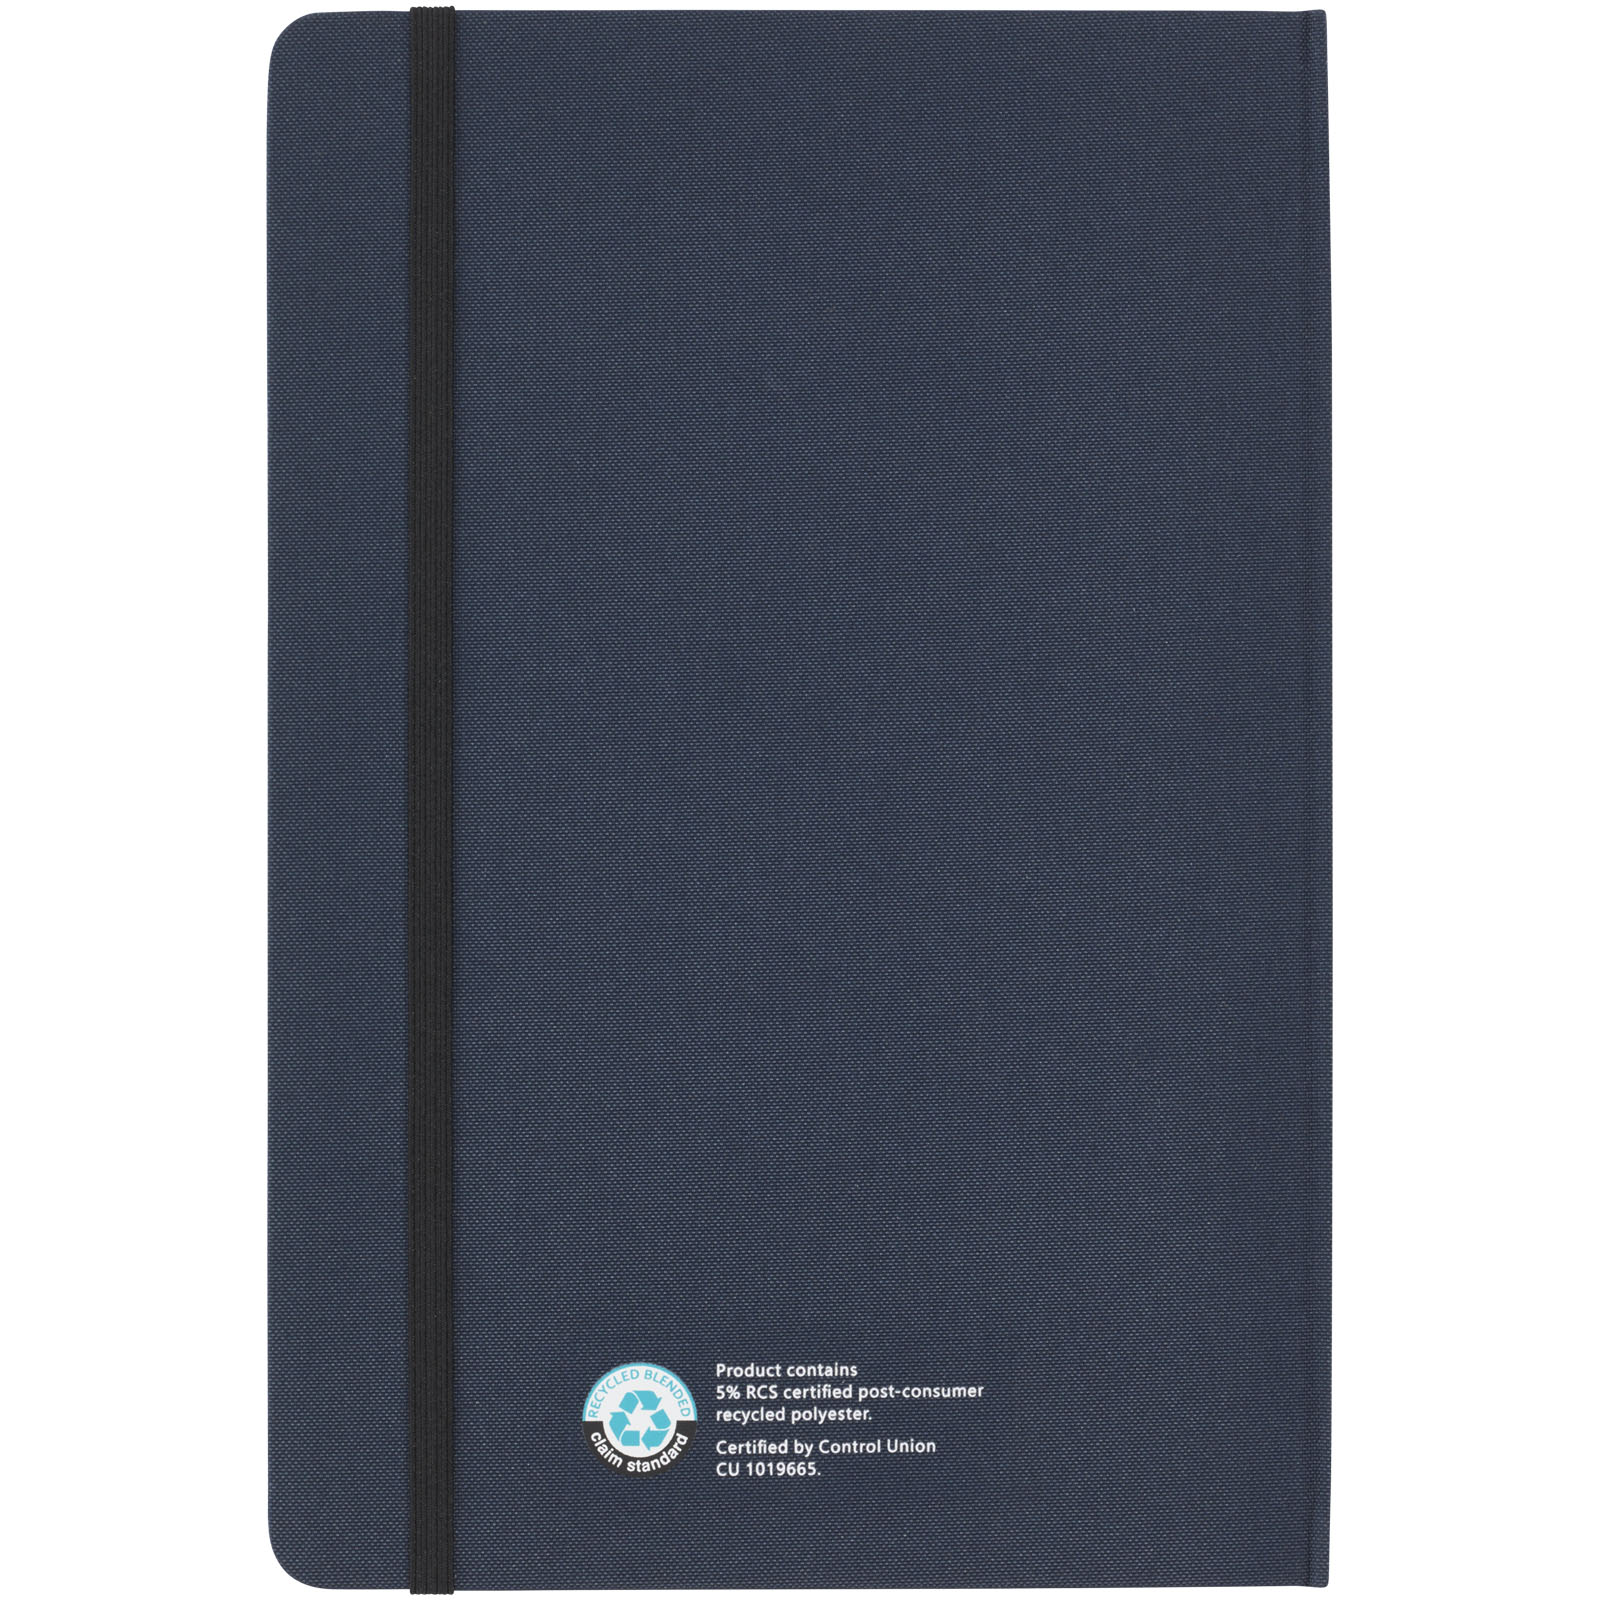 Advertising Hard cover notebooks - Skribo ballpoint pen and notebook set - 3